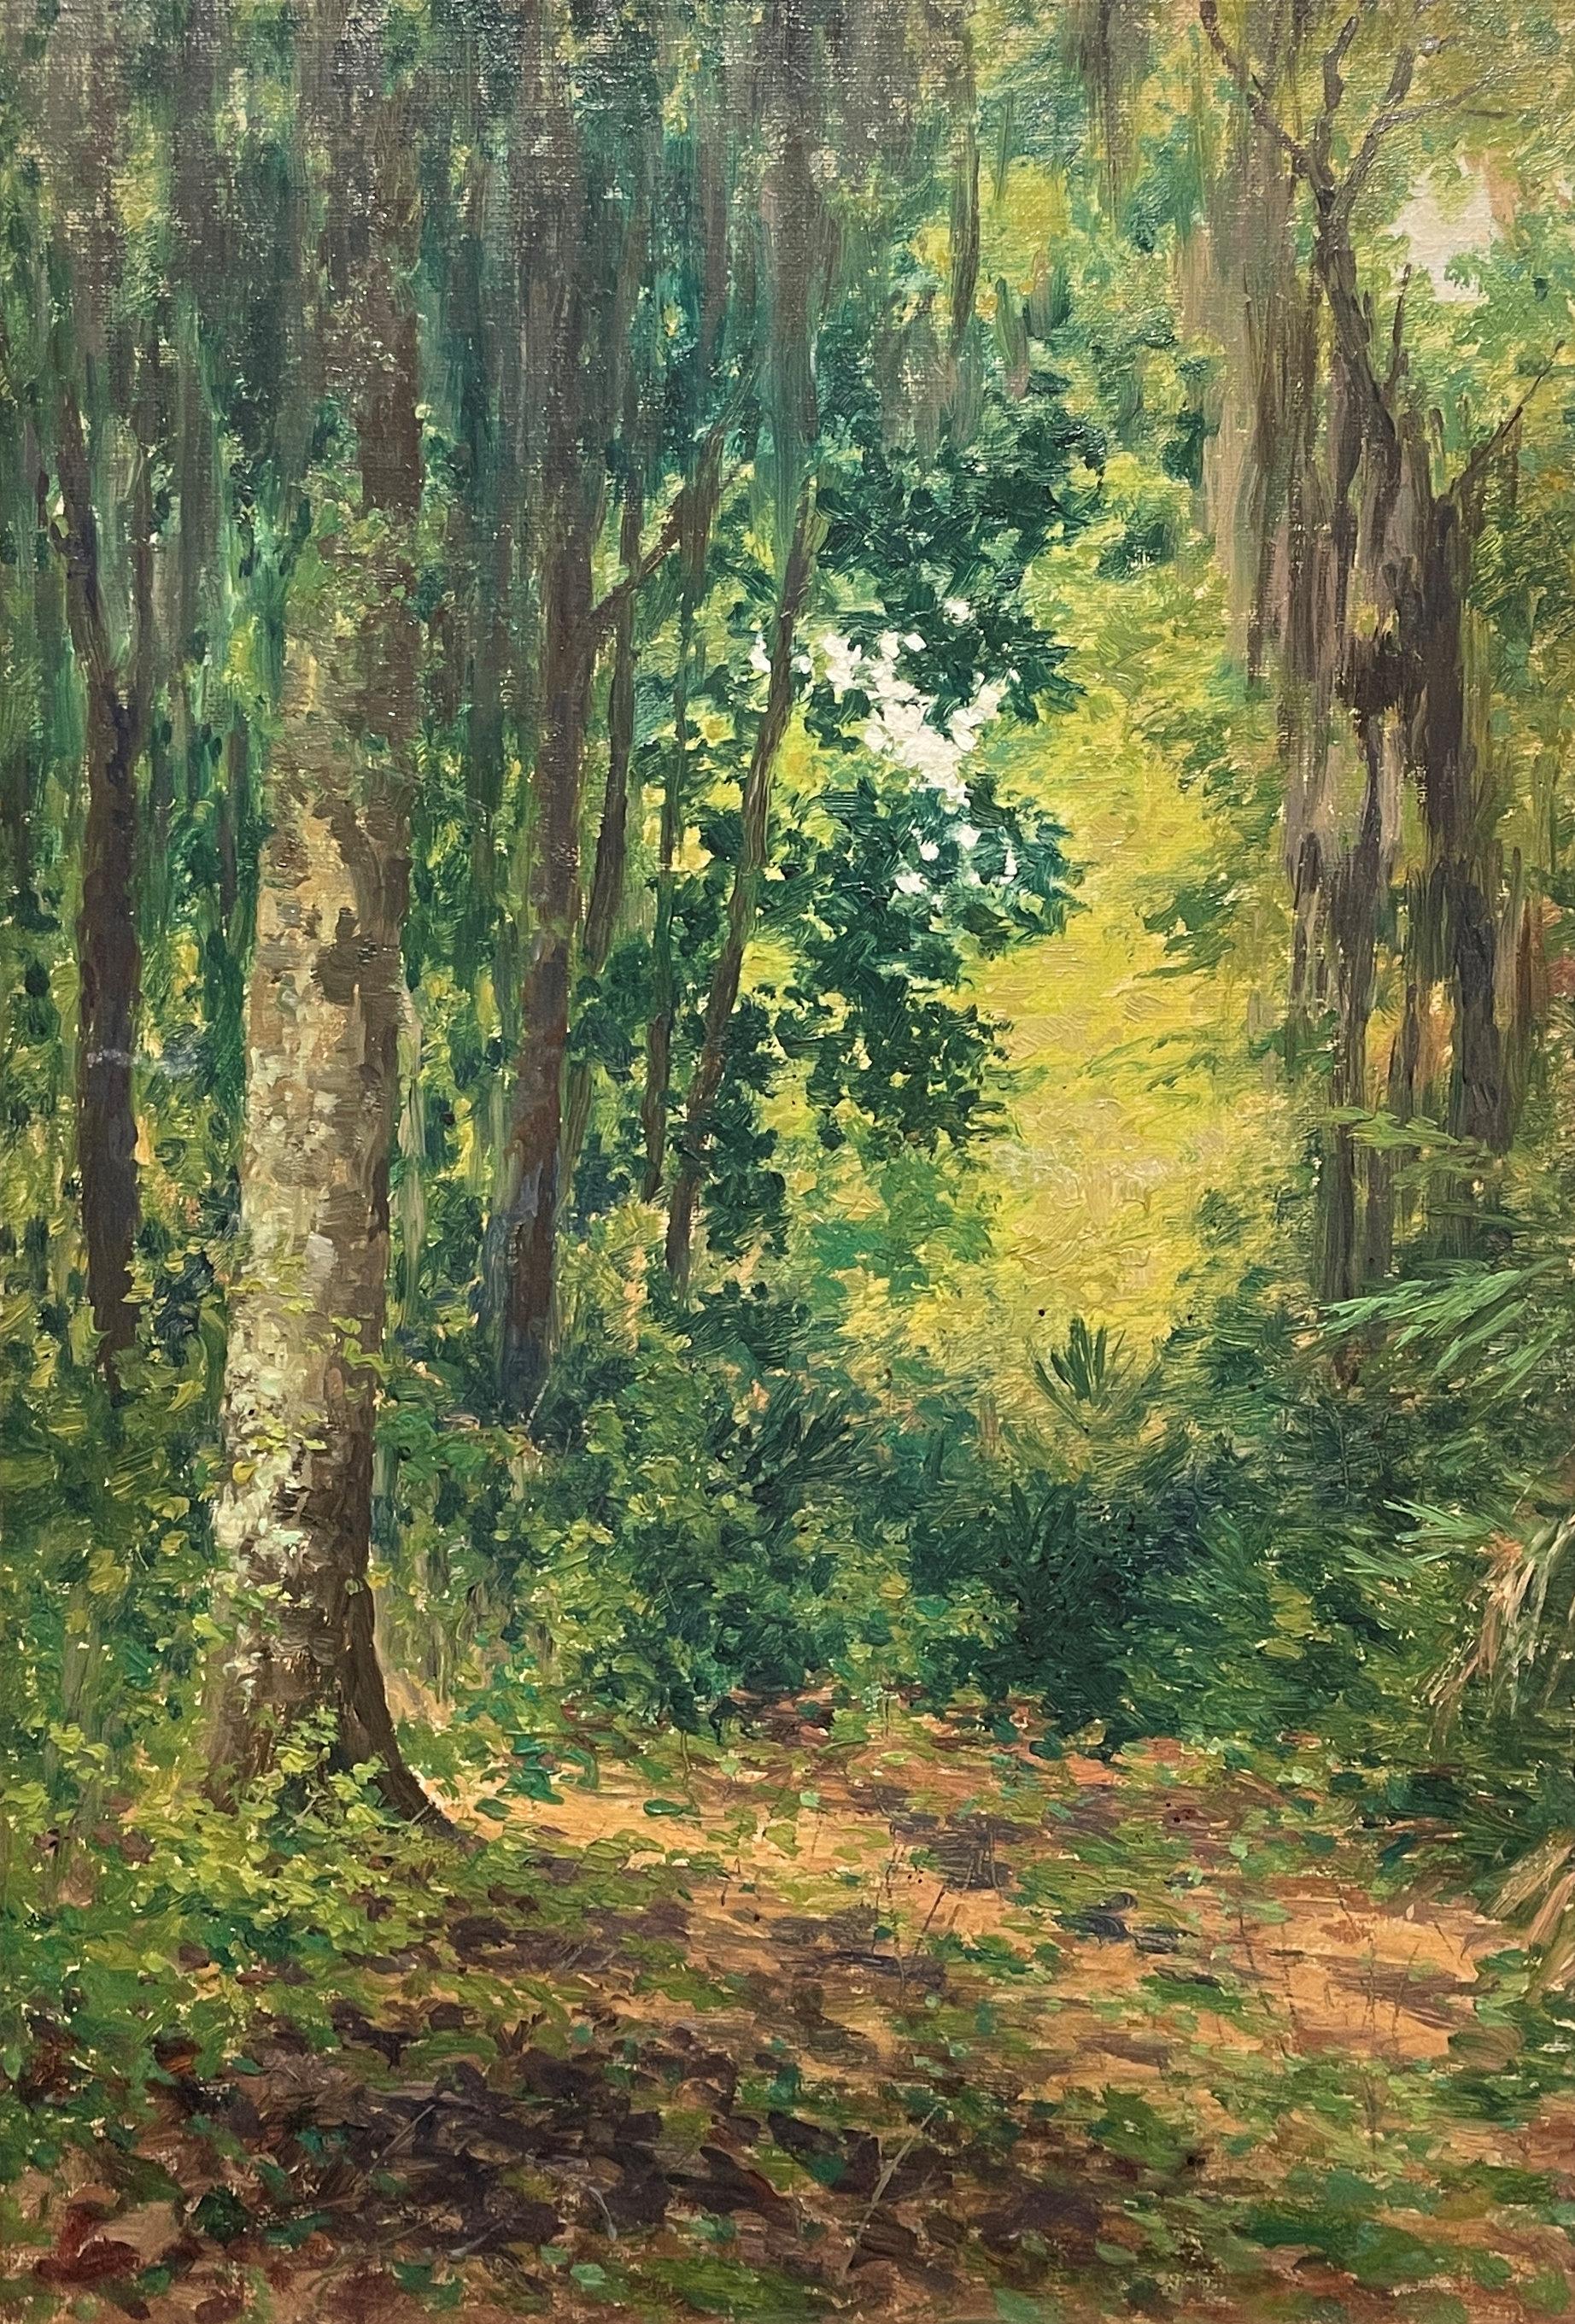 Landscape Painting George Morse - « Hubbard Park, Crescent City, Floride » George Frederick Morse, paysage